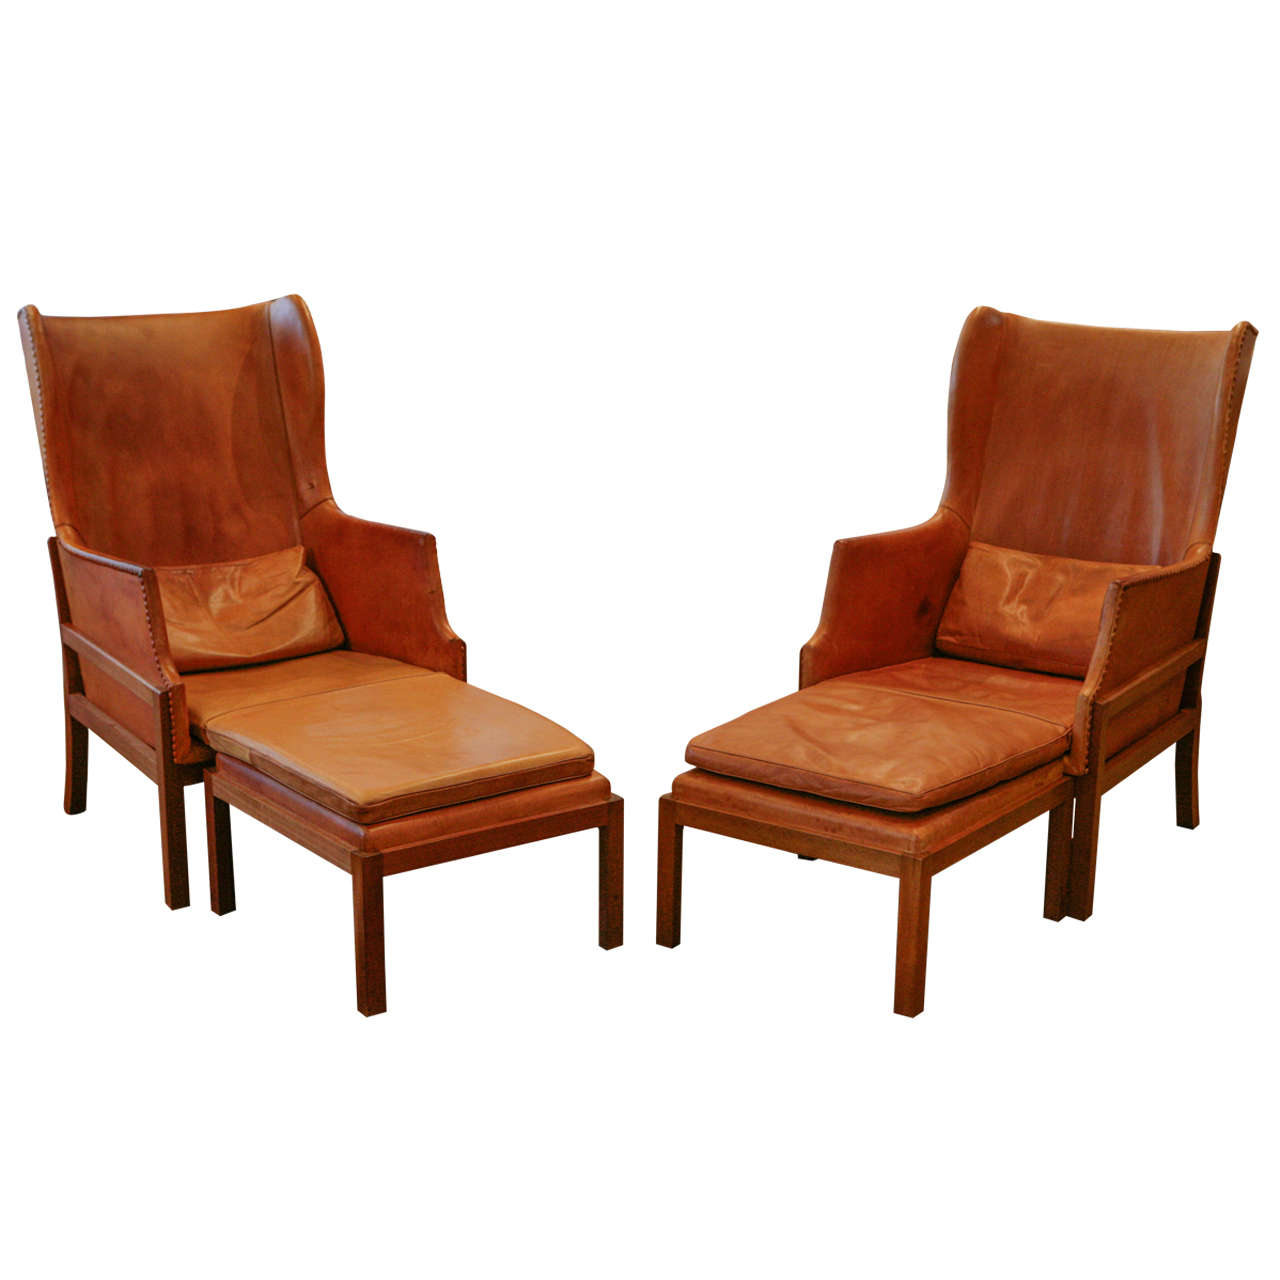 Pair of Mogens Koch Wing Chairs, Denmark 1930